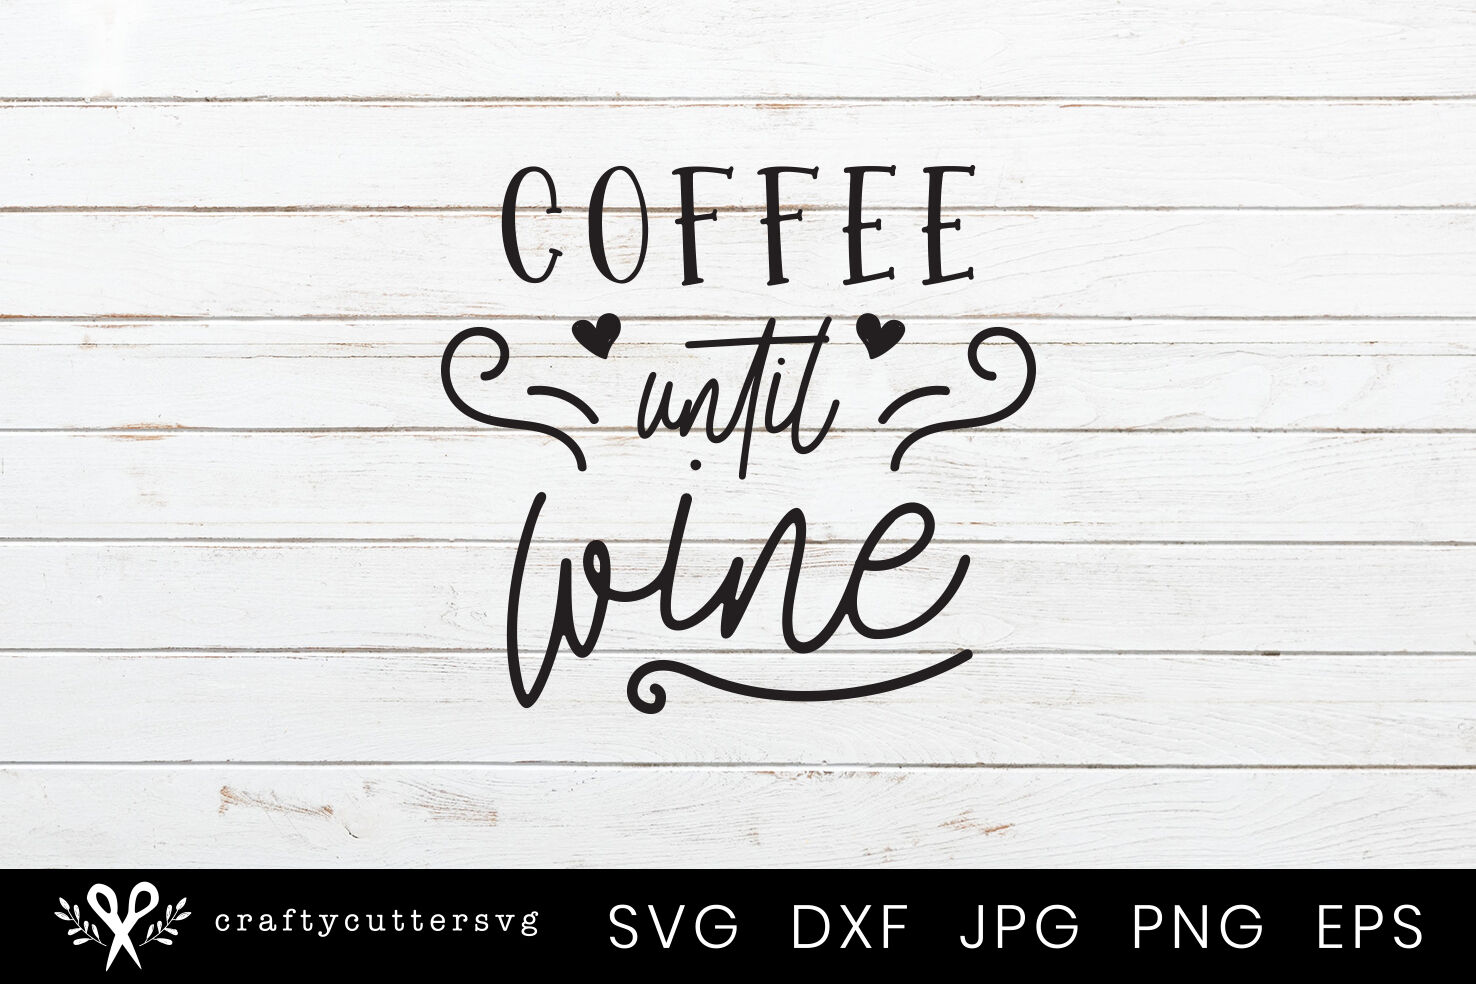 Coffee until wine Svg Heart Cutting File Design By Crafty ...